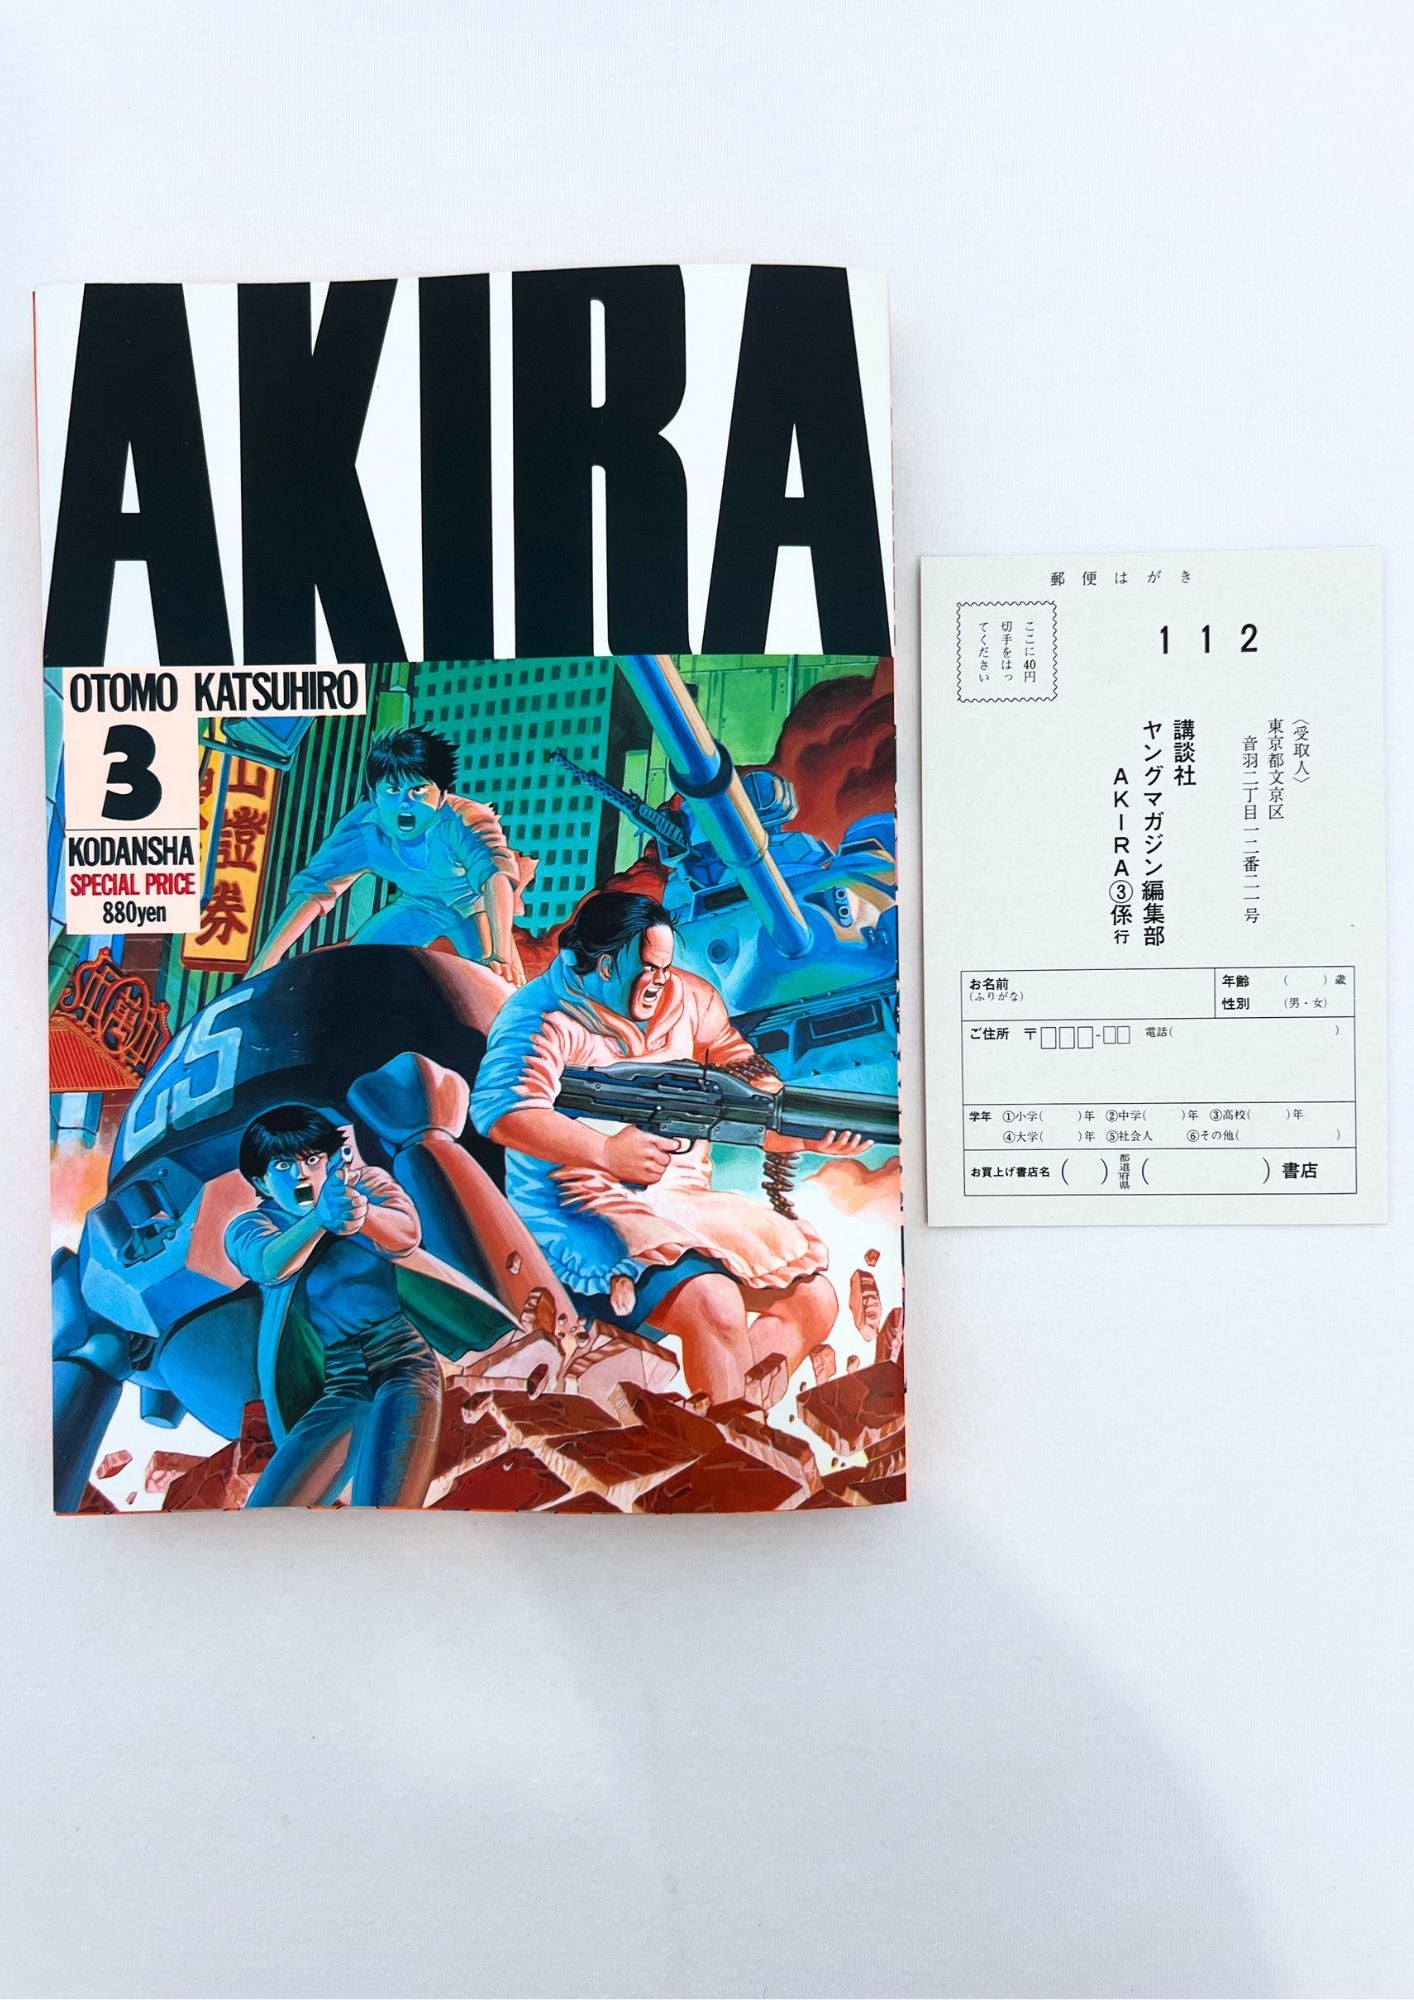 1998 Vintage AKIRA Official Young Magazine Vol.3 Manga Cover T-shirt / 1986 AKIRA Japanese Manga Vol. 3 1st Printing Issued Set